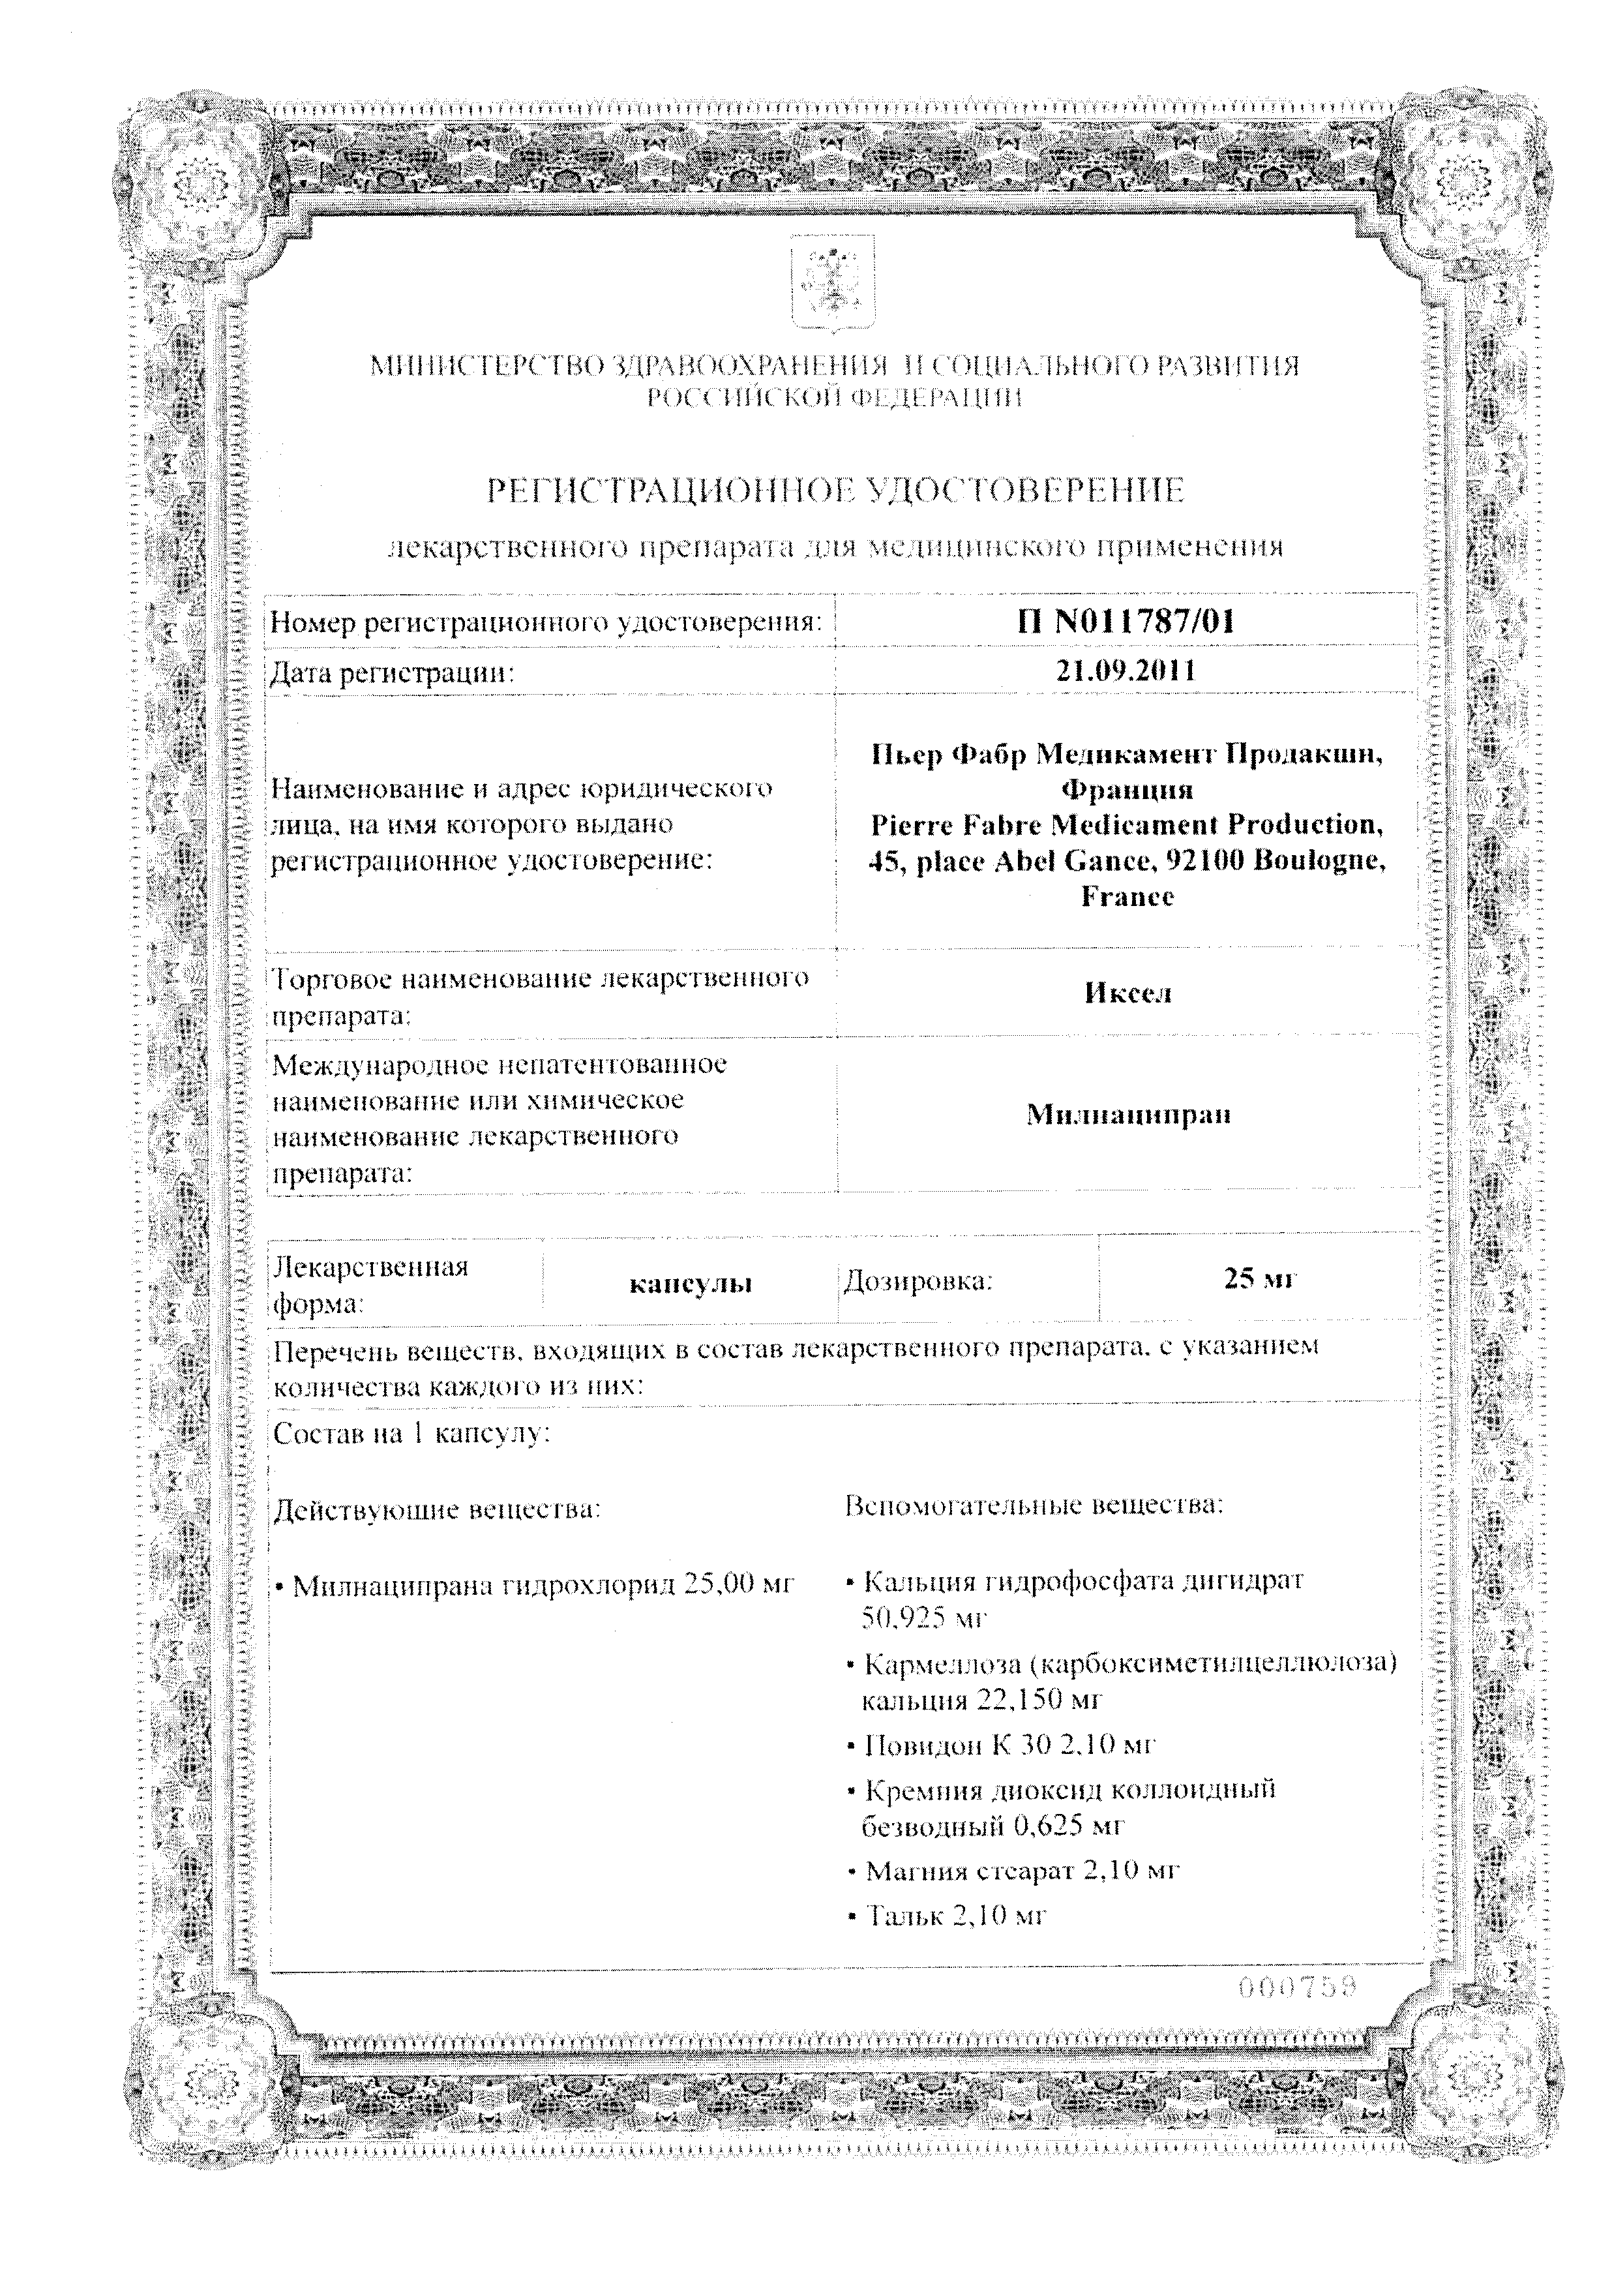 Иксел сертификат